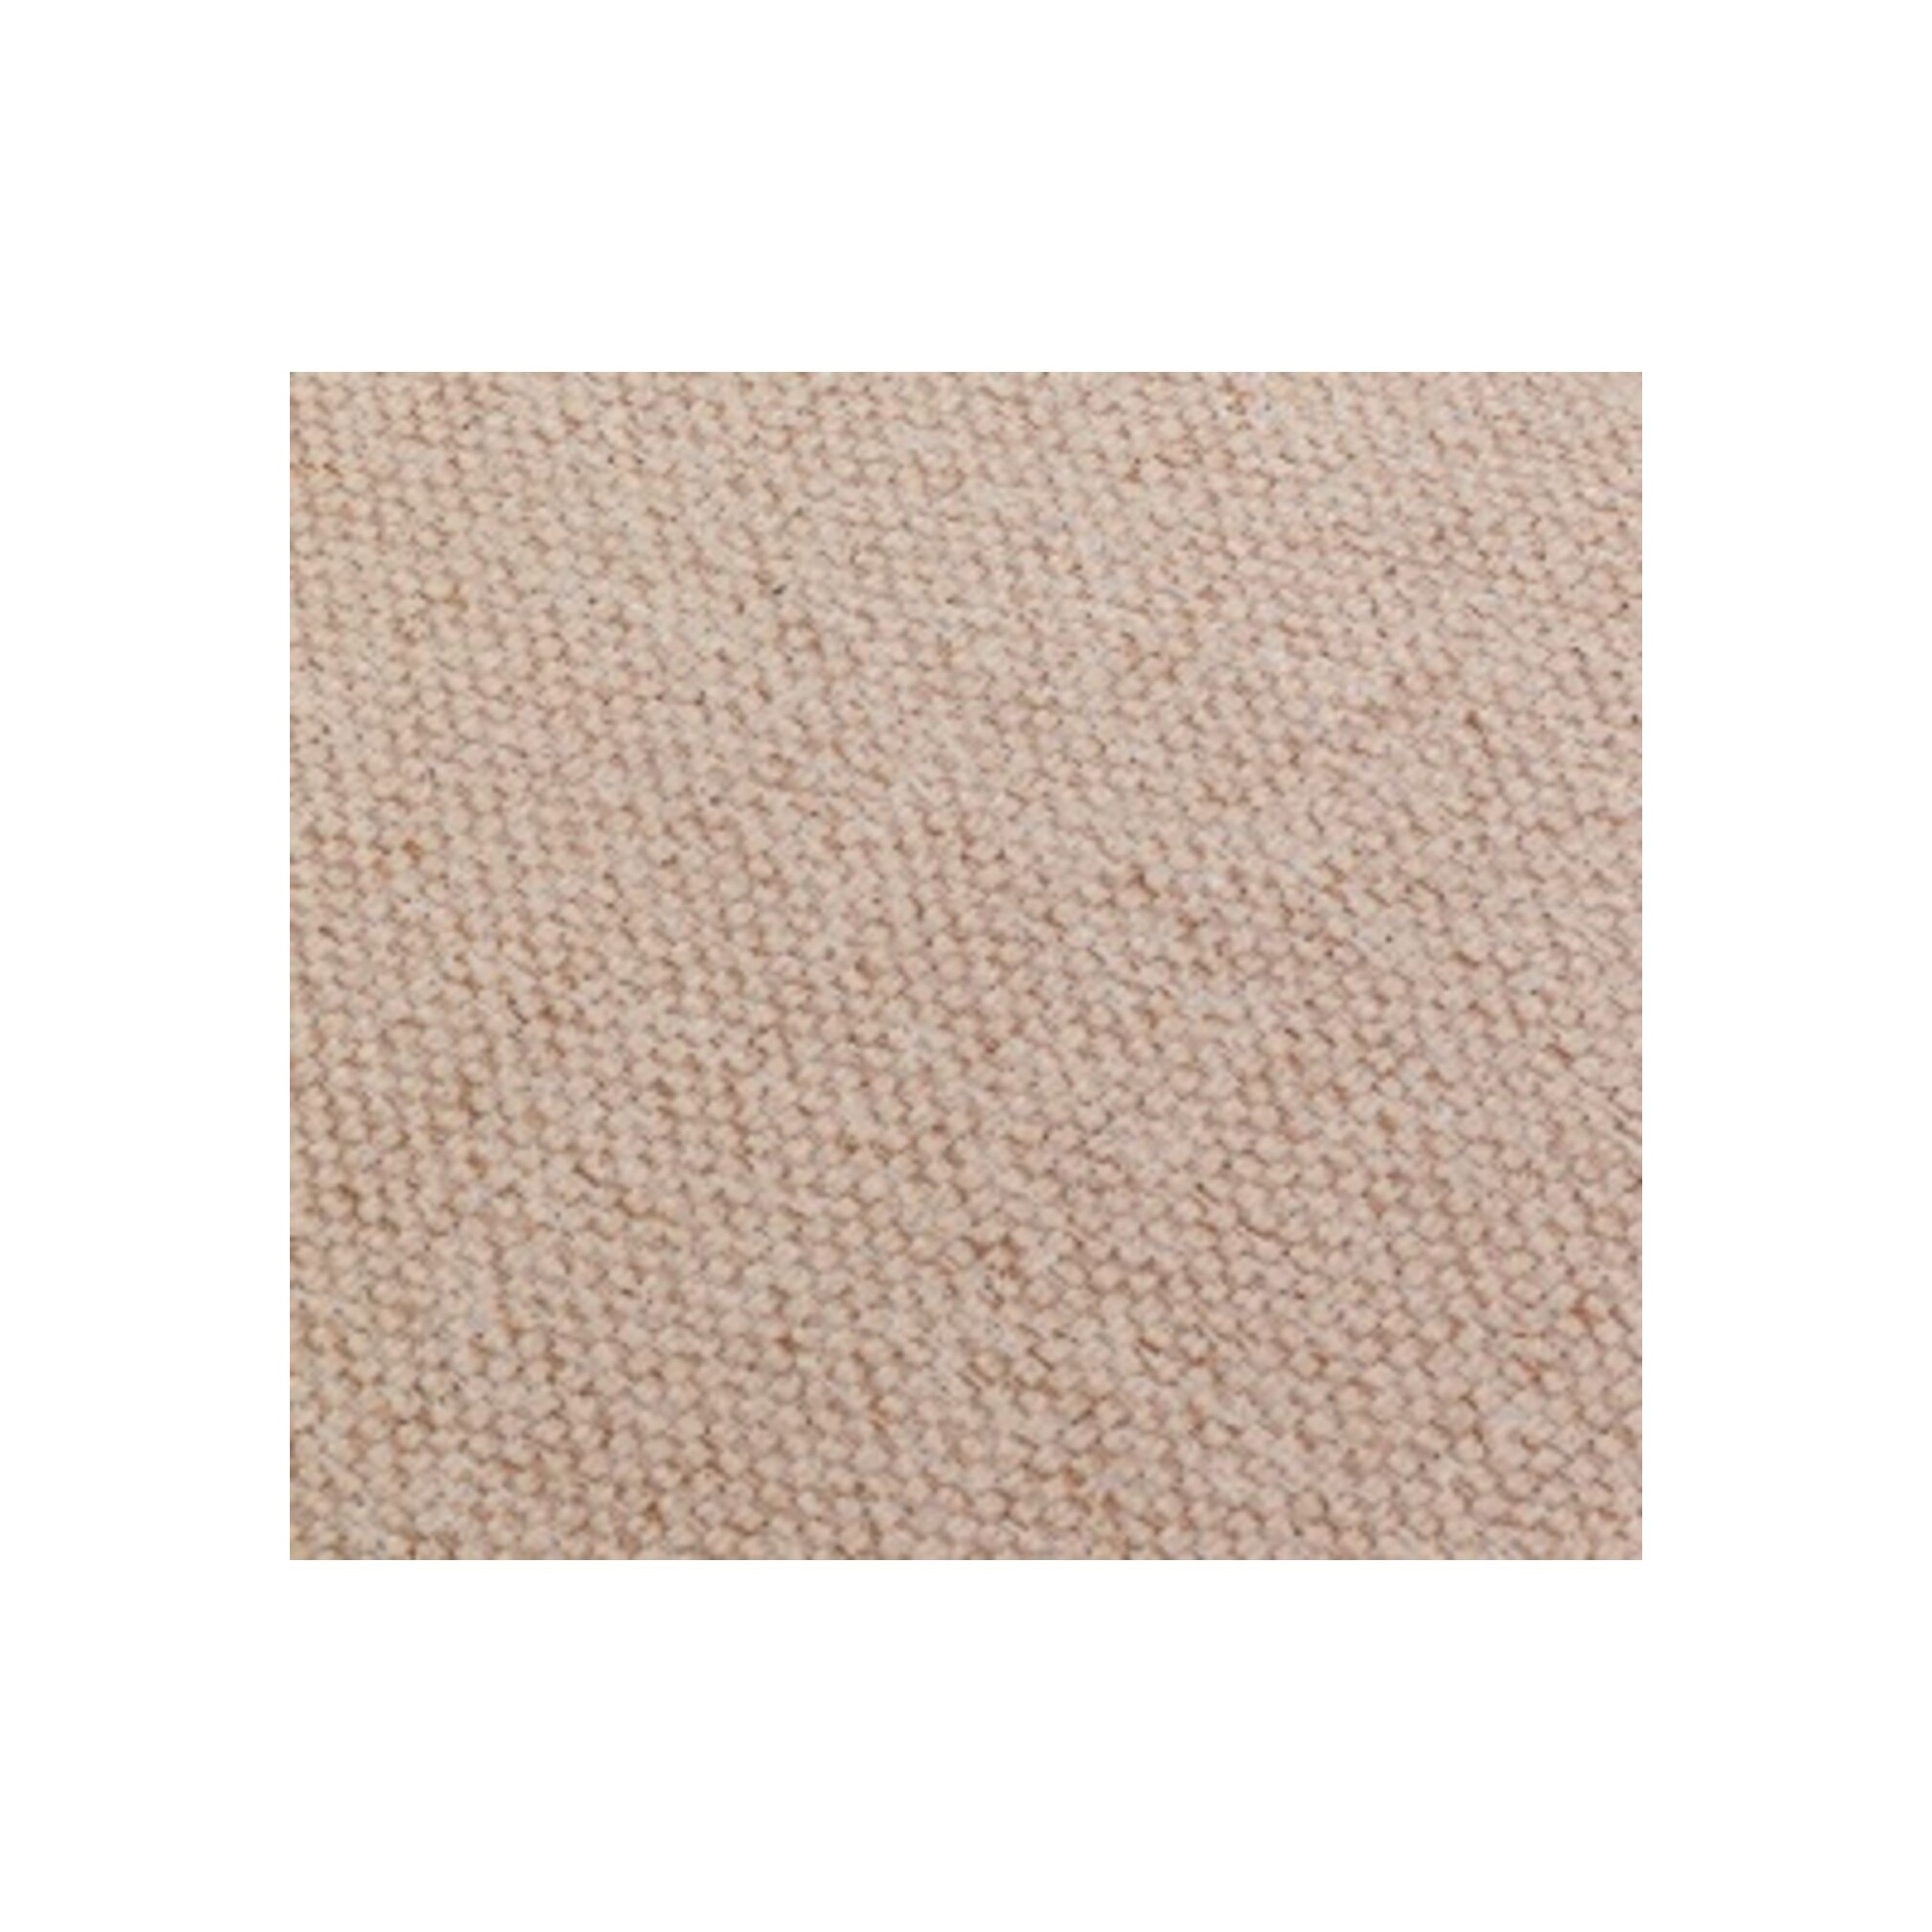 Échantillon de tissu GR crème 10x10cm Kare Design